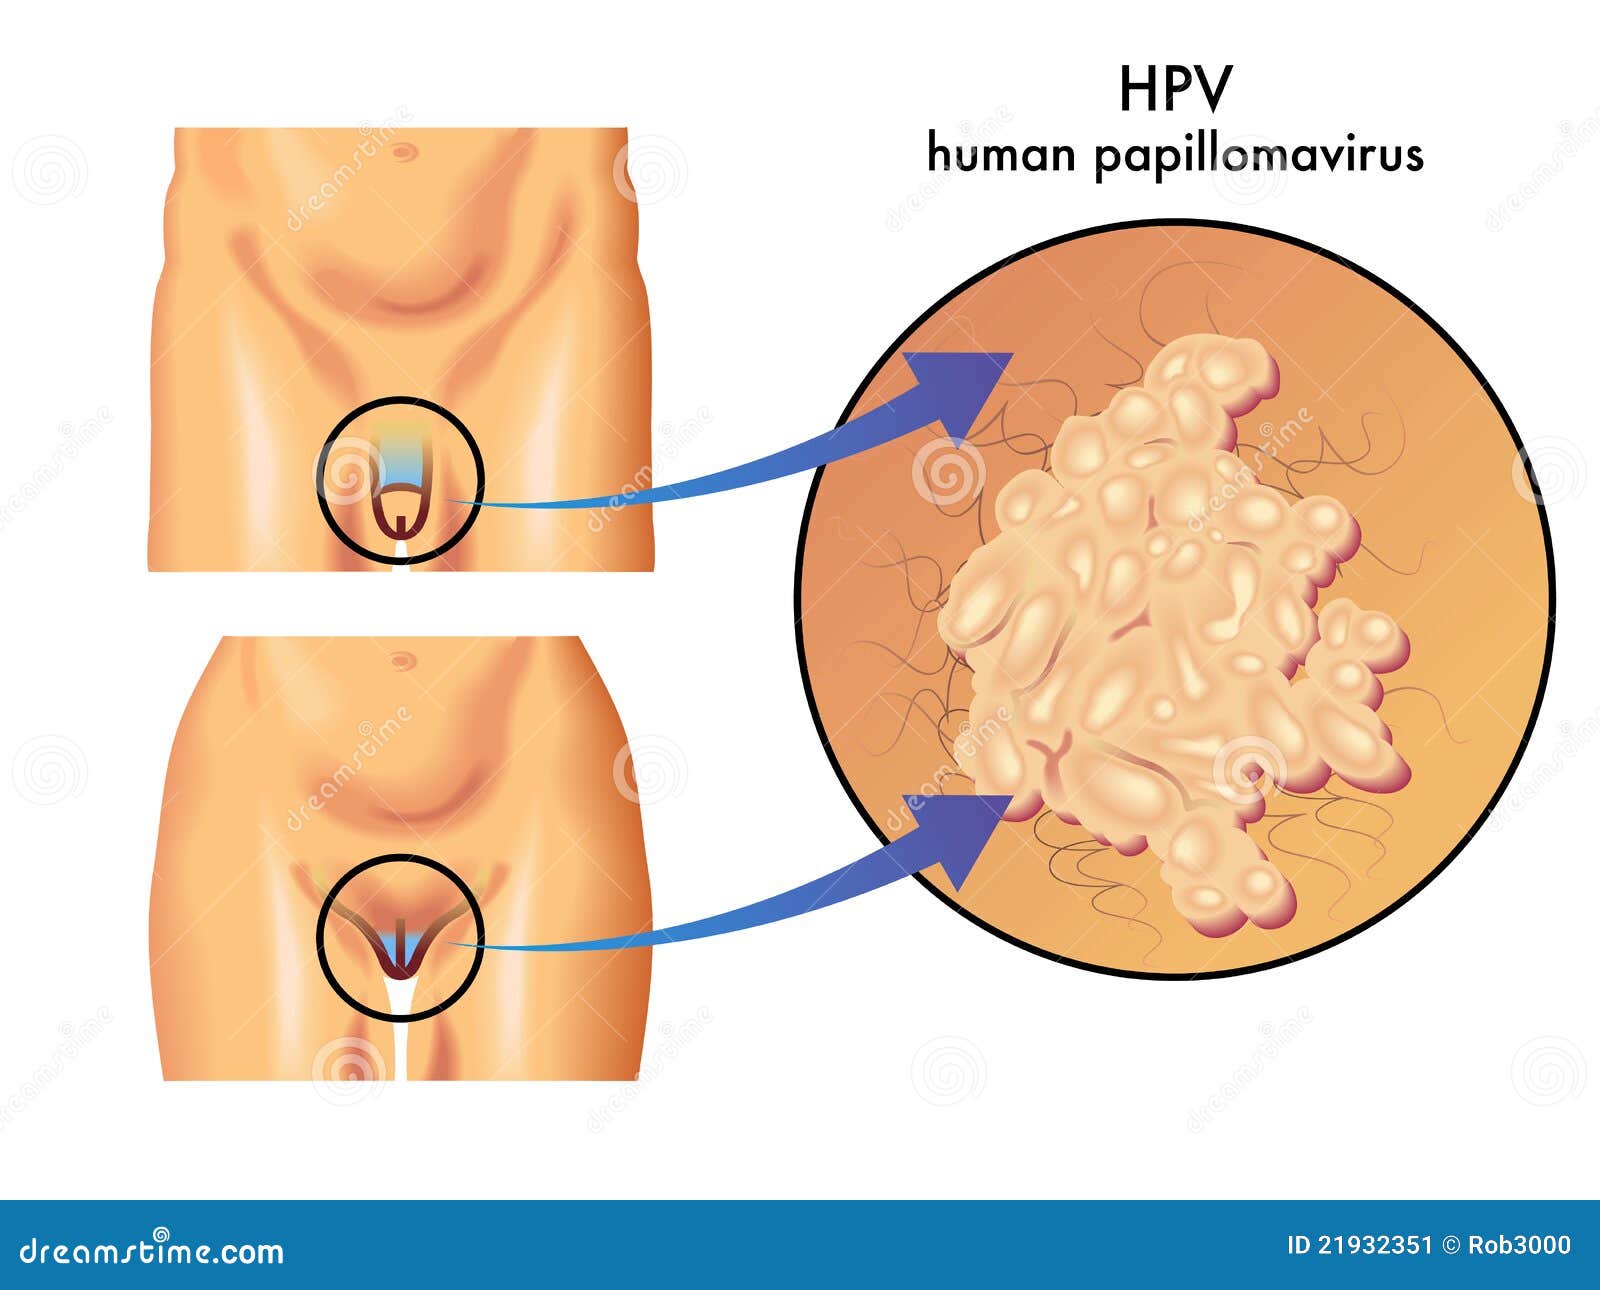 hpv virus definition